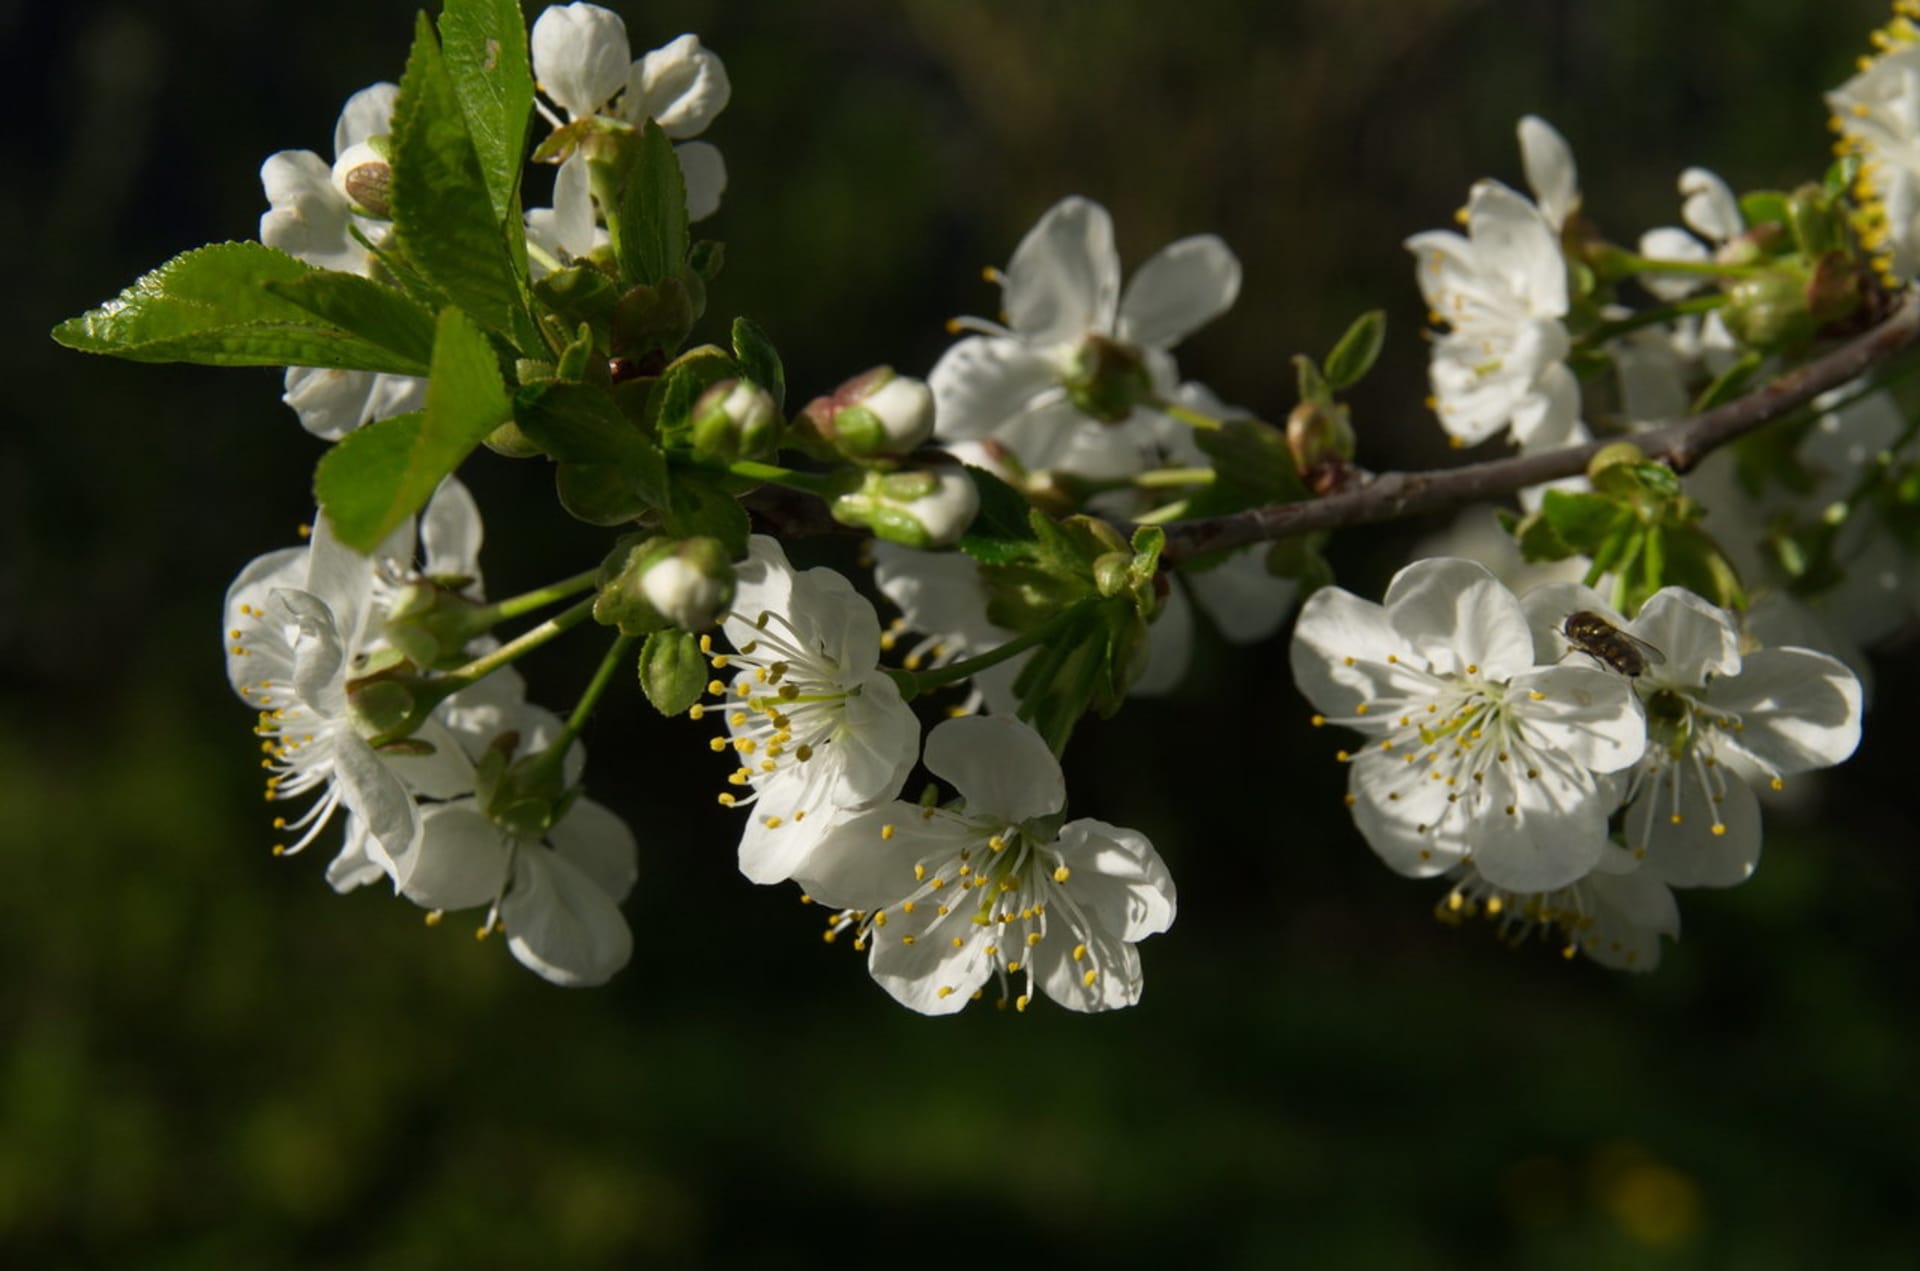 Višeň/Prunus cerasus L. - detail